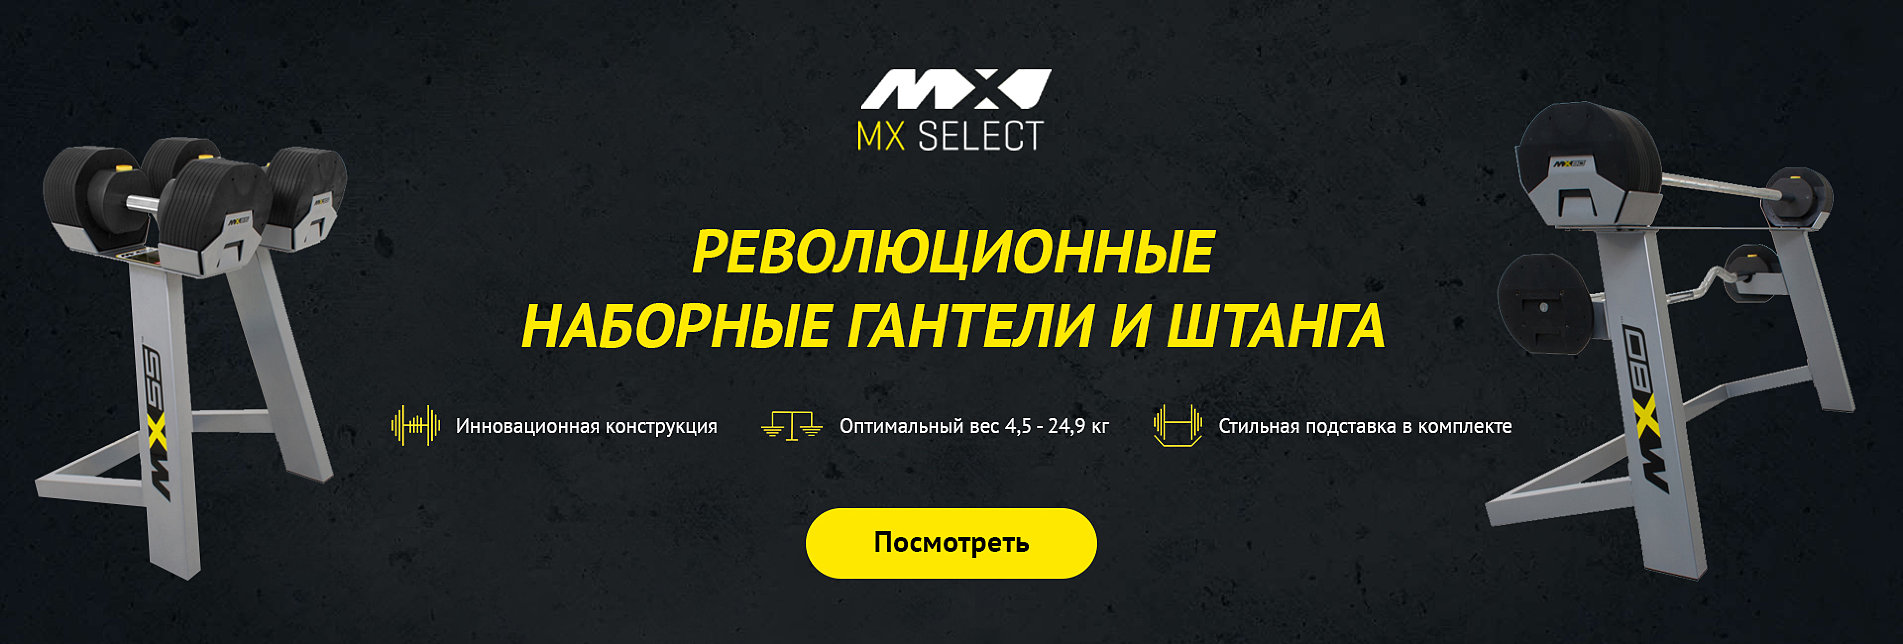 mx select